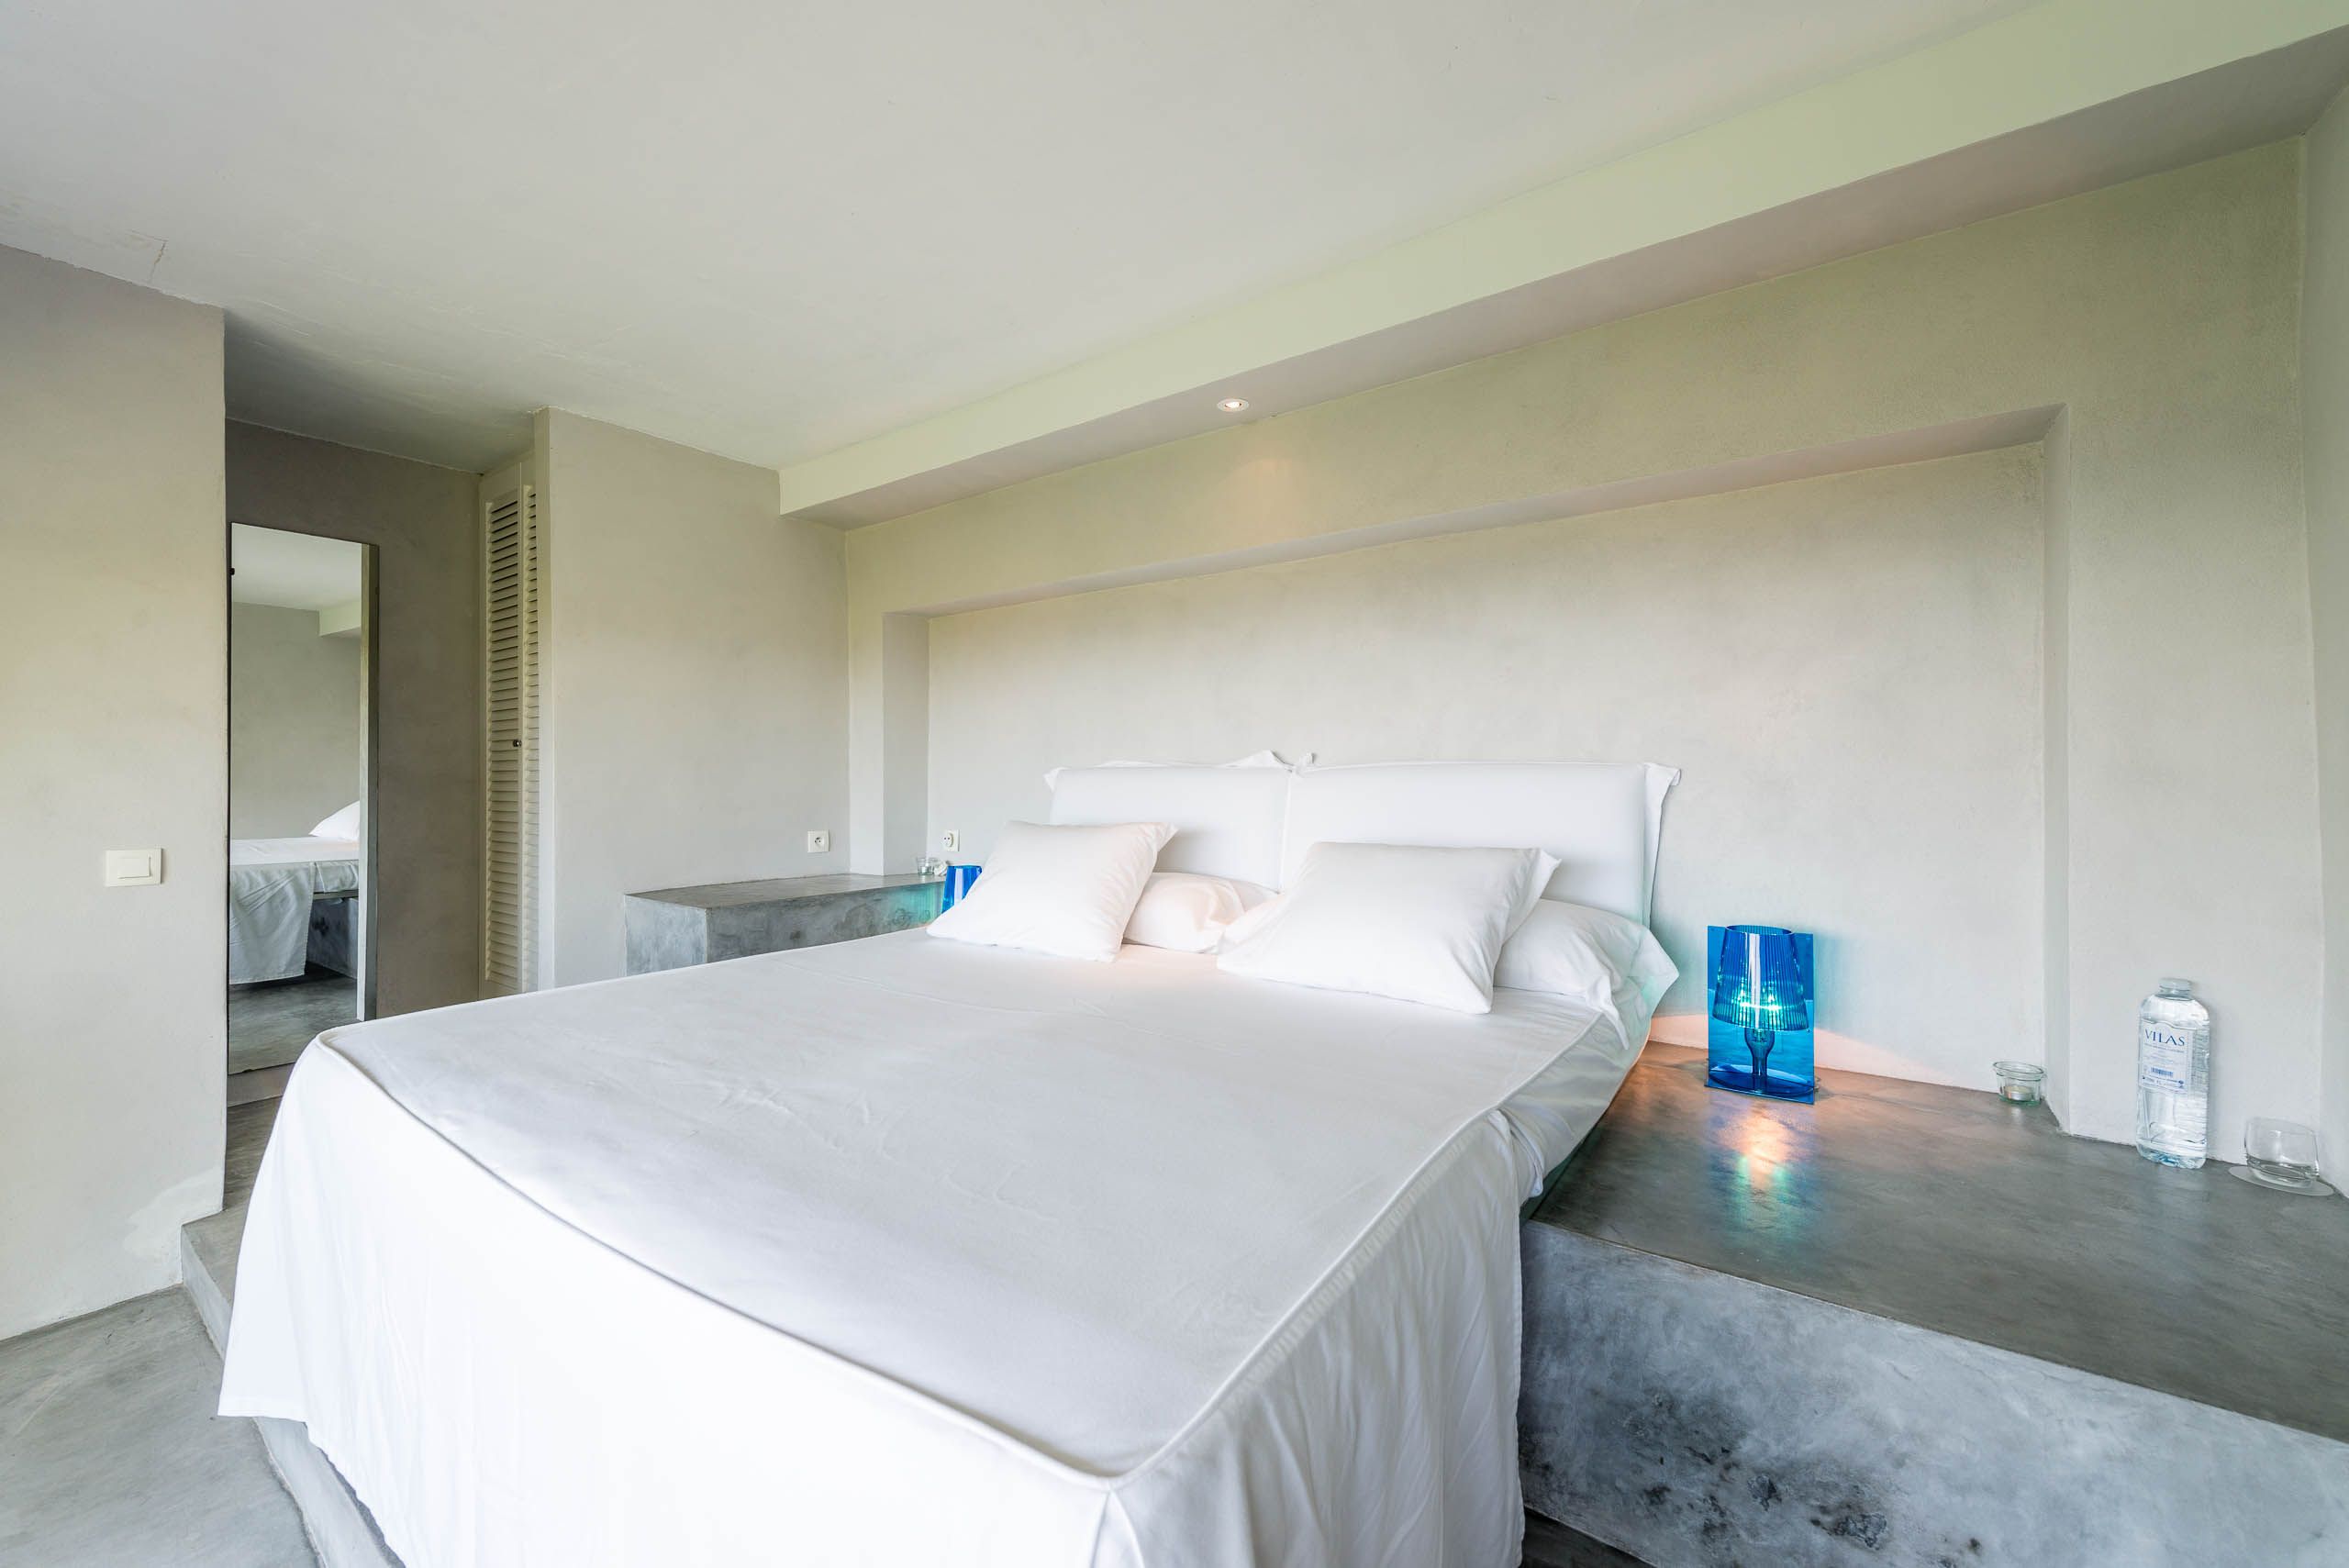 Luxury 6 bedroom villa near Ibiza town, luxury villa, ultramodern rental villa, rental property, 